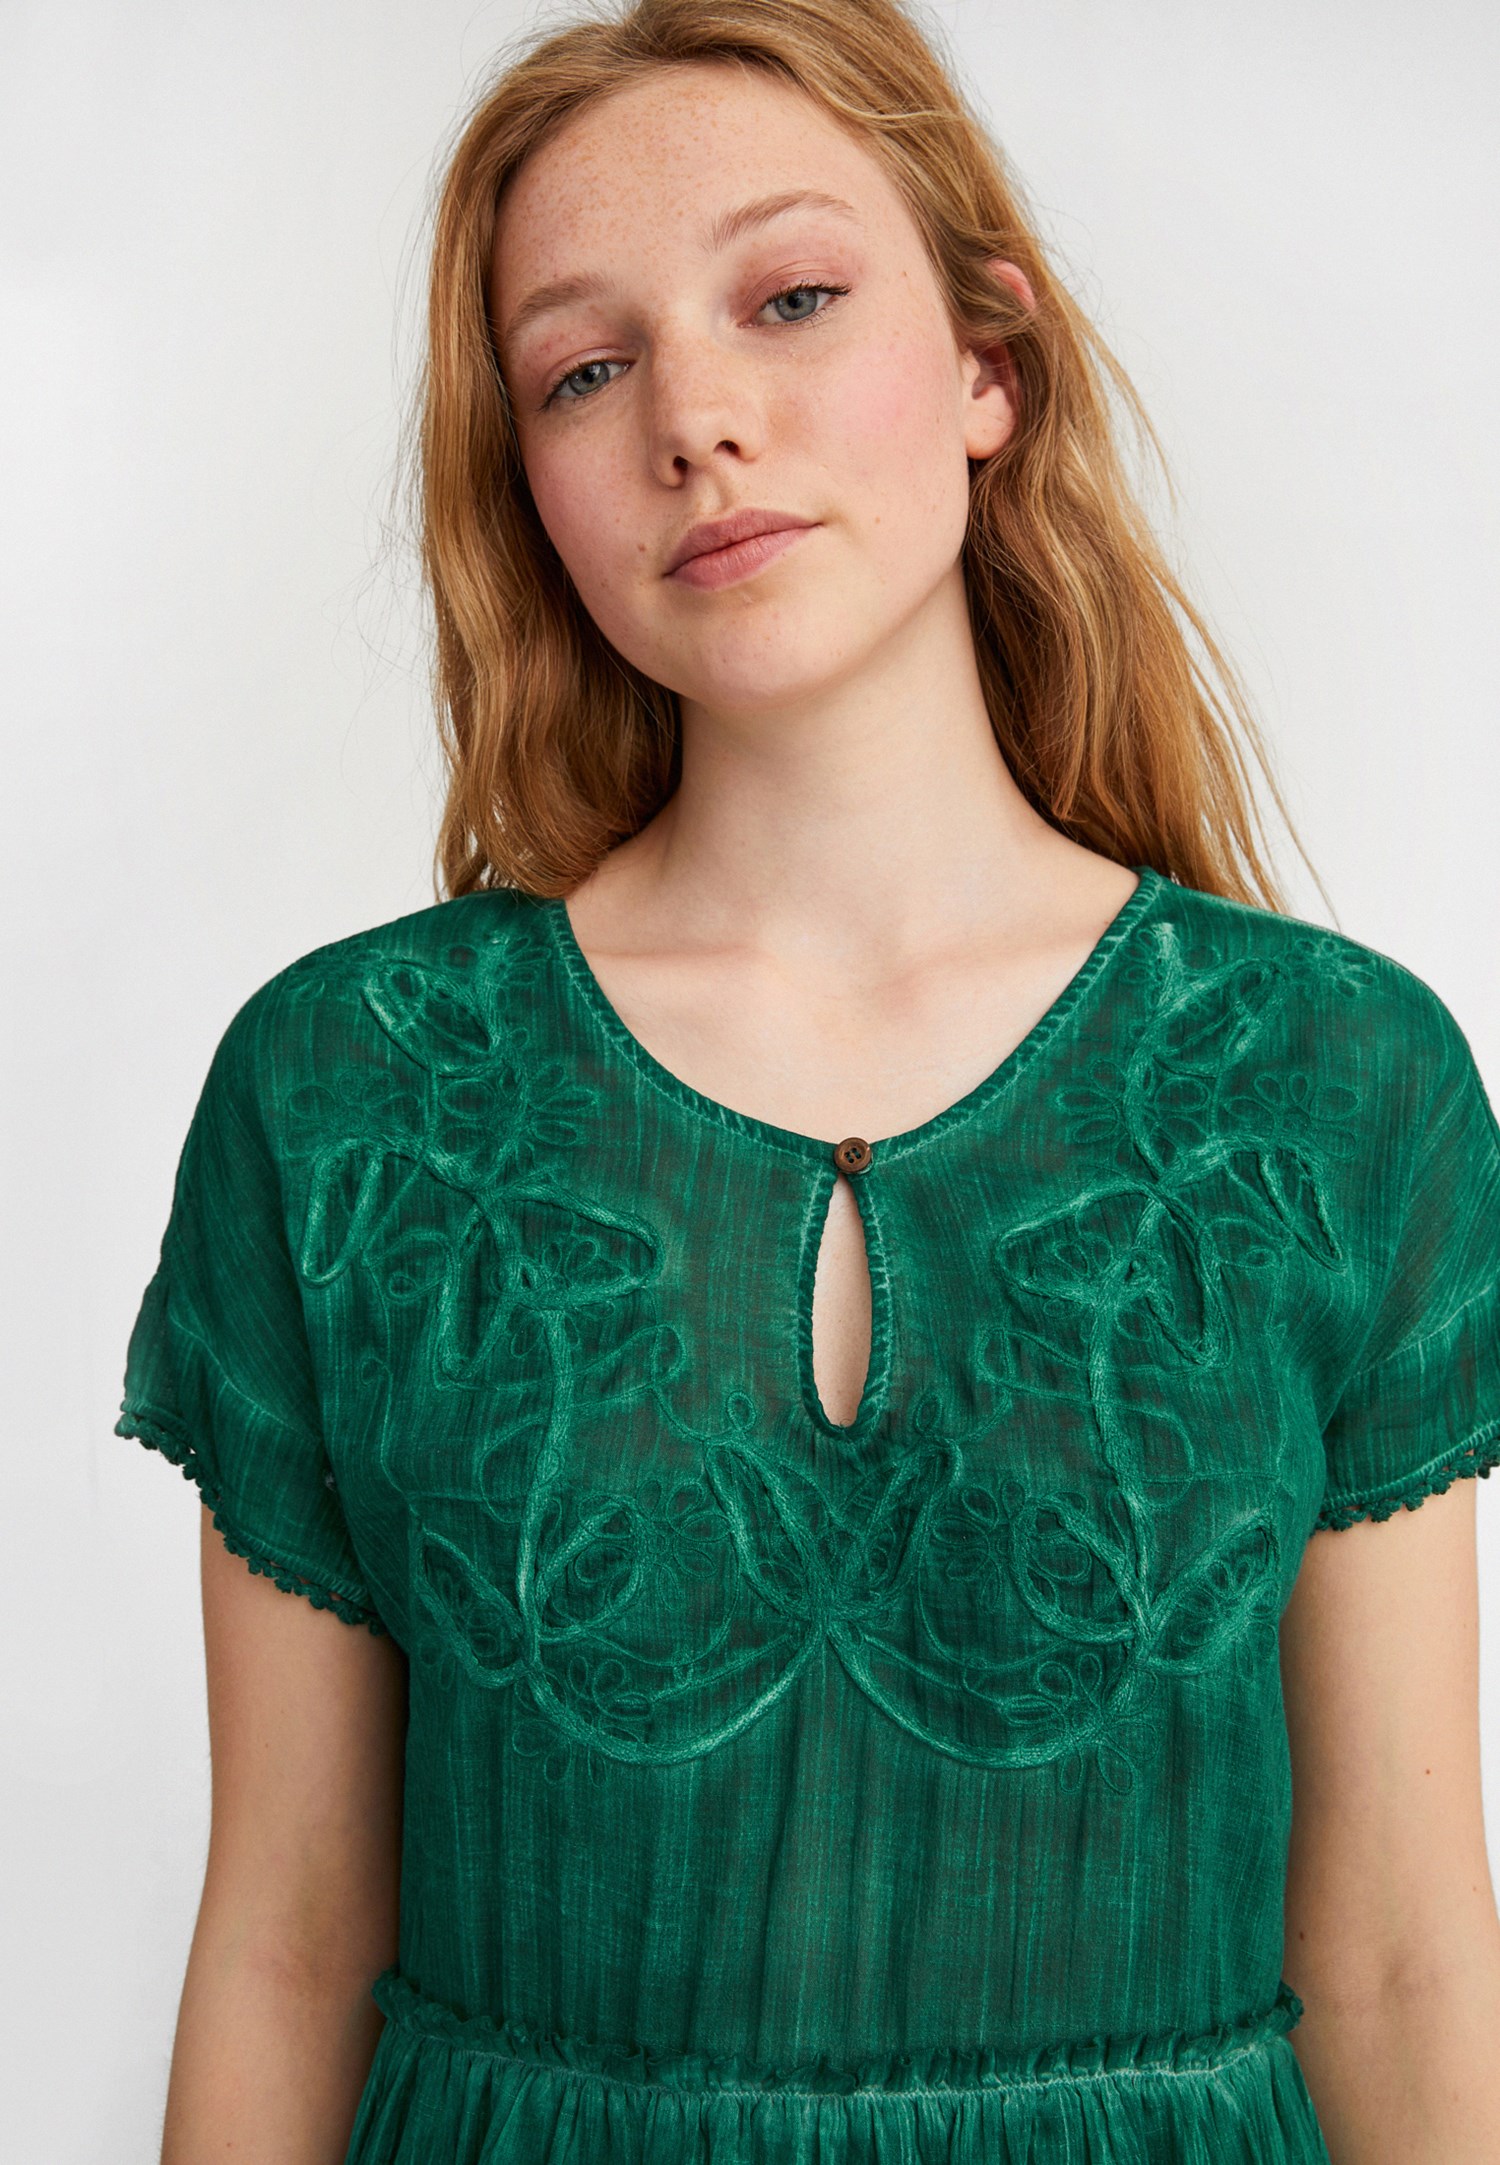 Women Green Embroidery Mini Dress